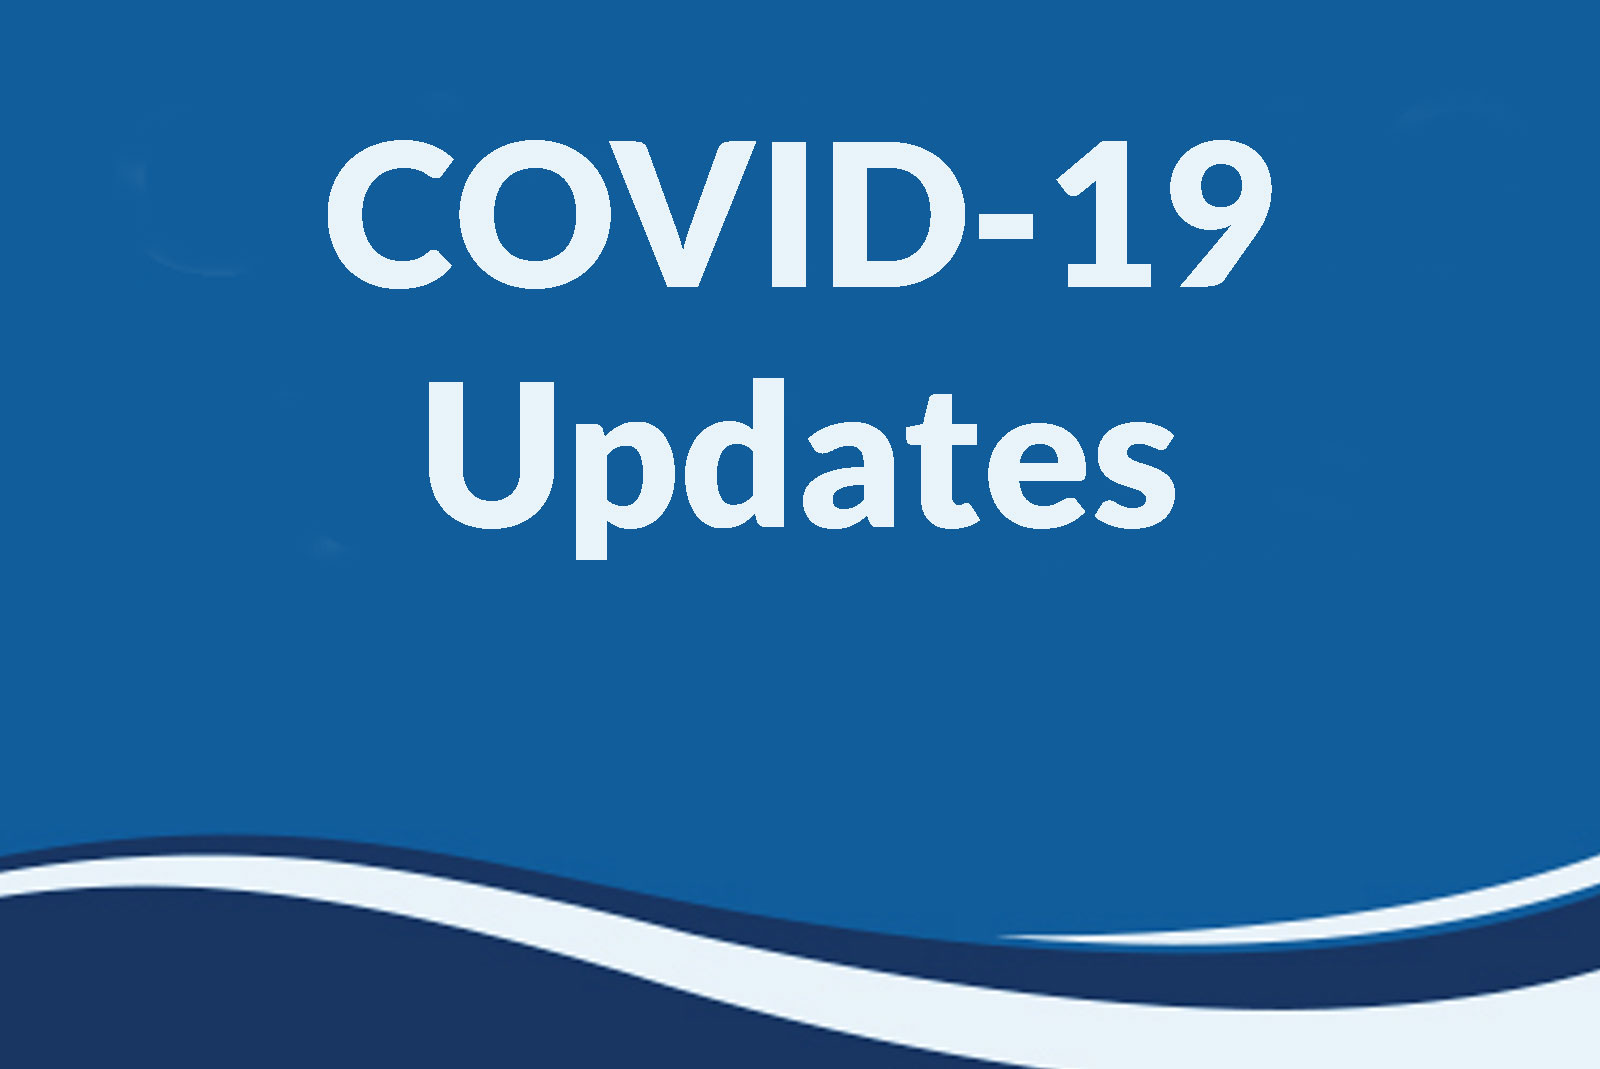 COVID-19 updates logo